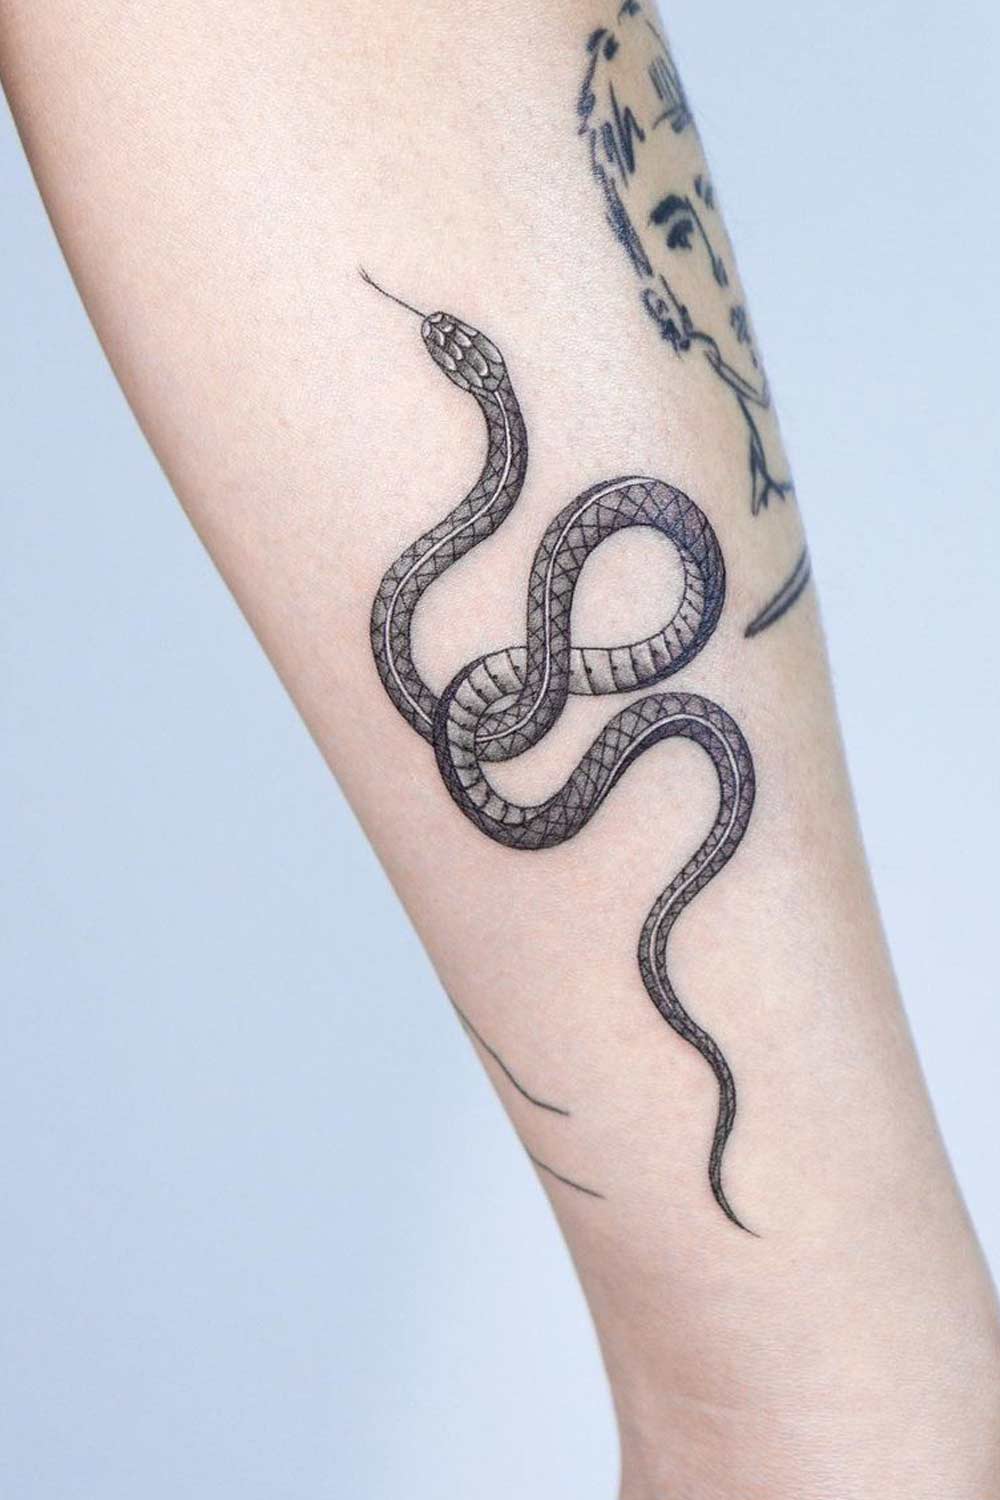 Black and White Snake Tattoo